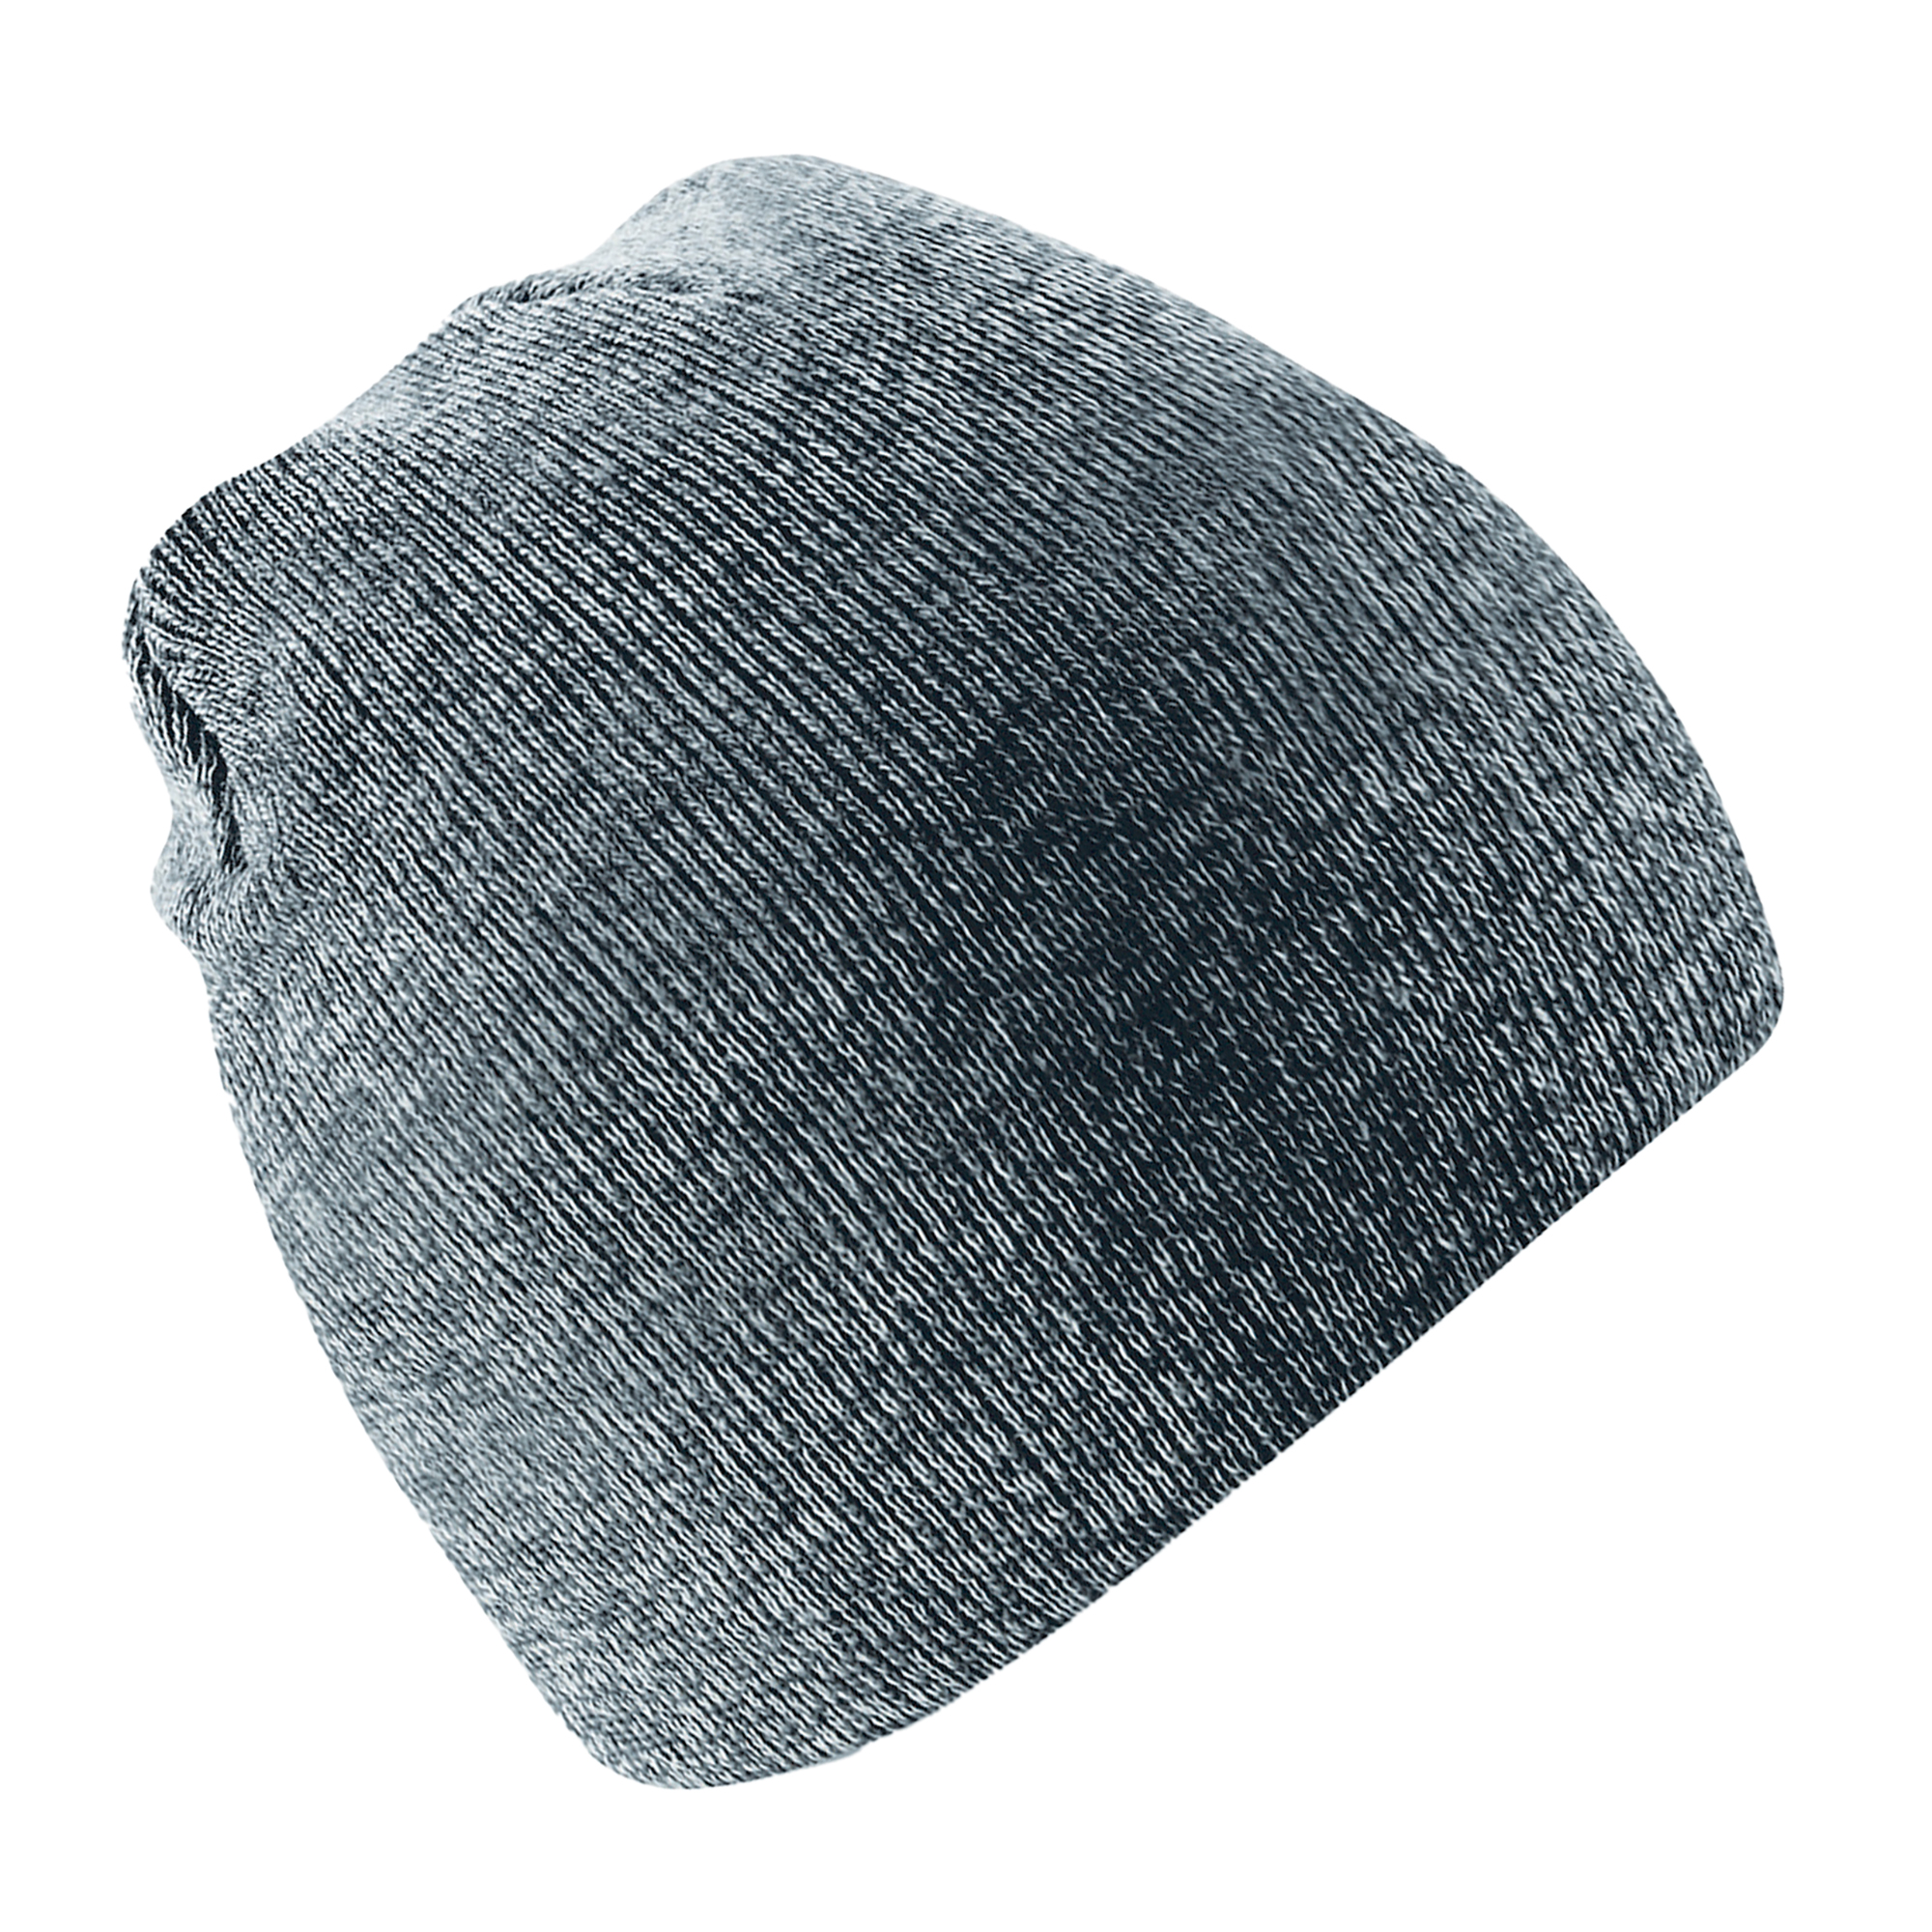 Beechfield Plain Basic Knitted Winter Beanie Hat - image 2 of 3